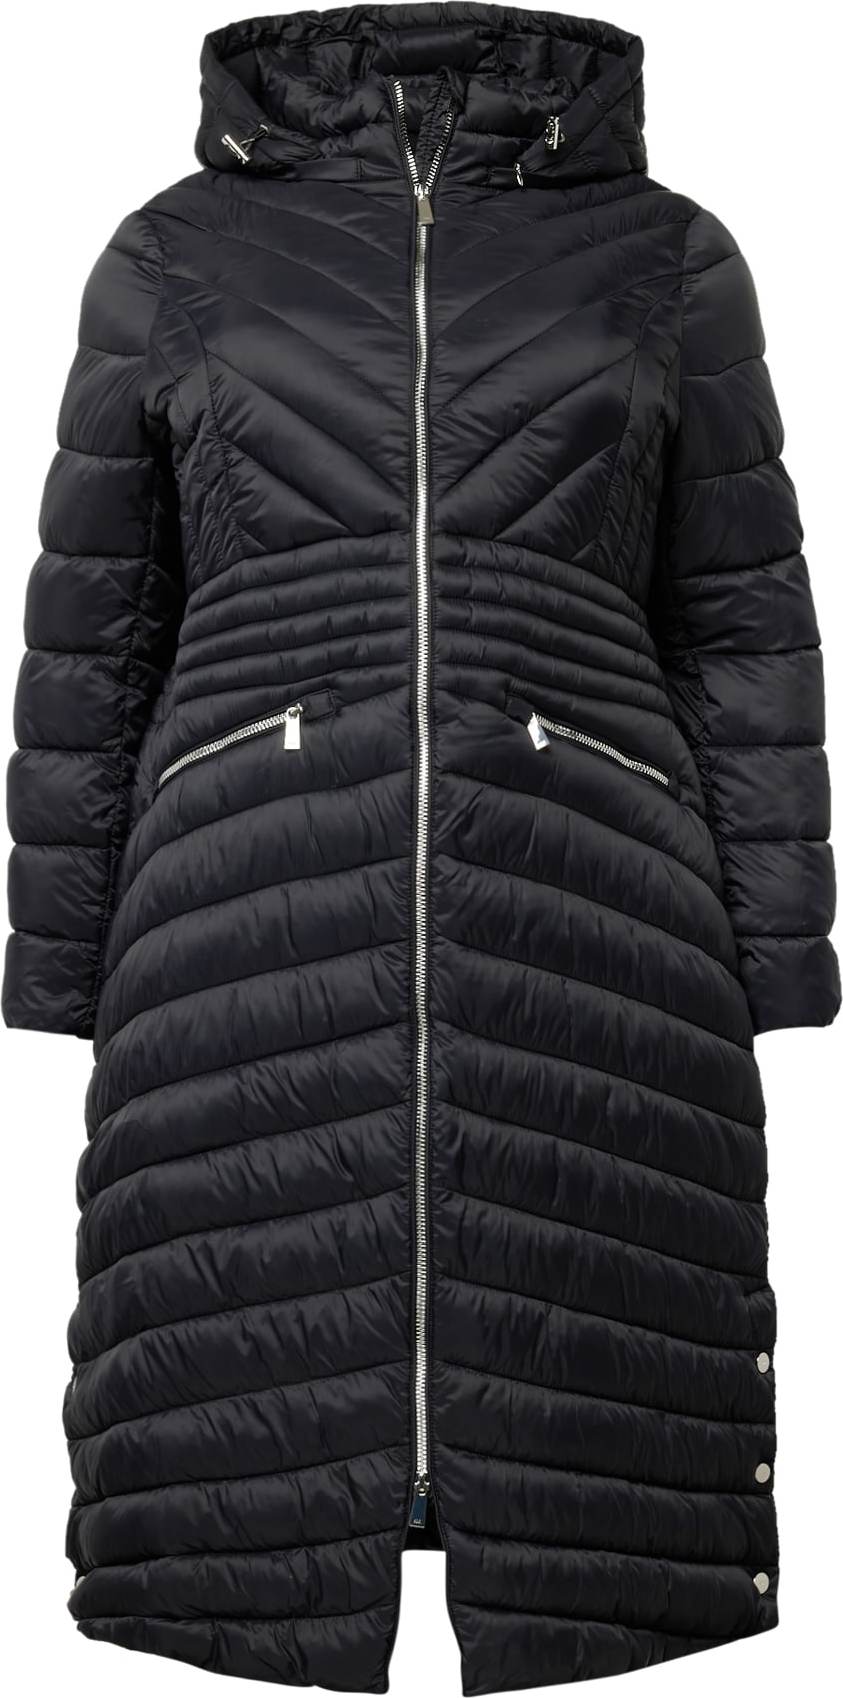 Zimní kabát Karen Millen Curve černá